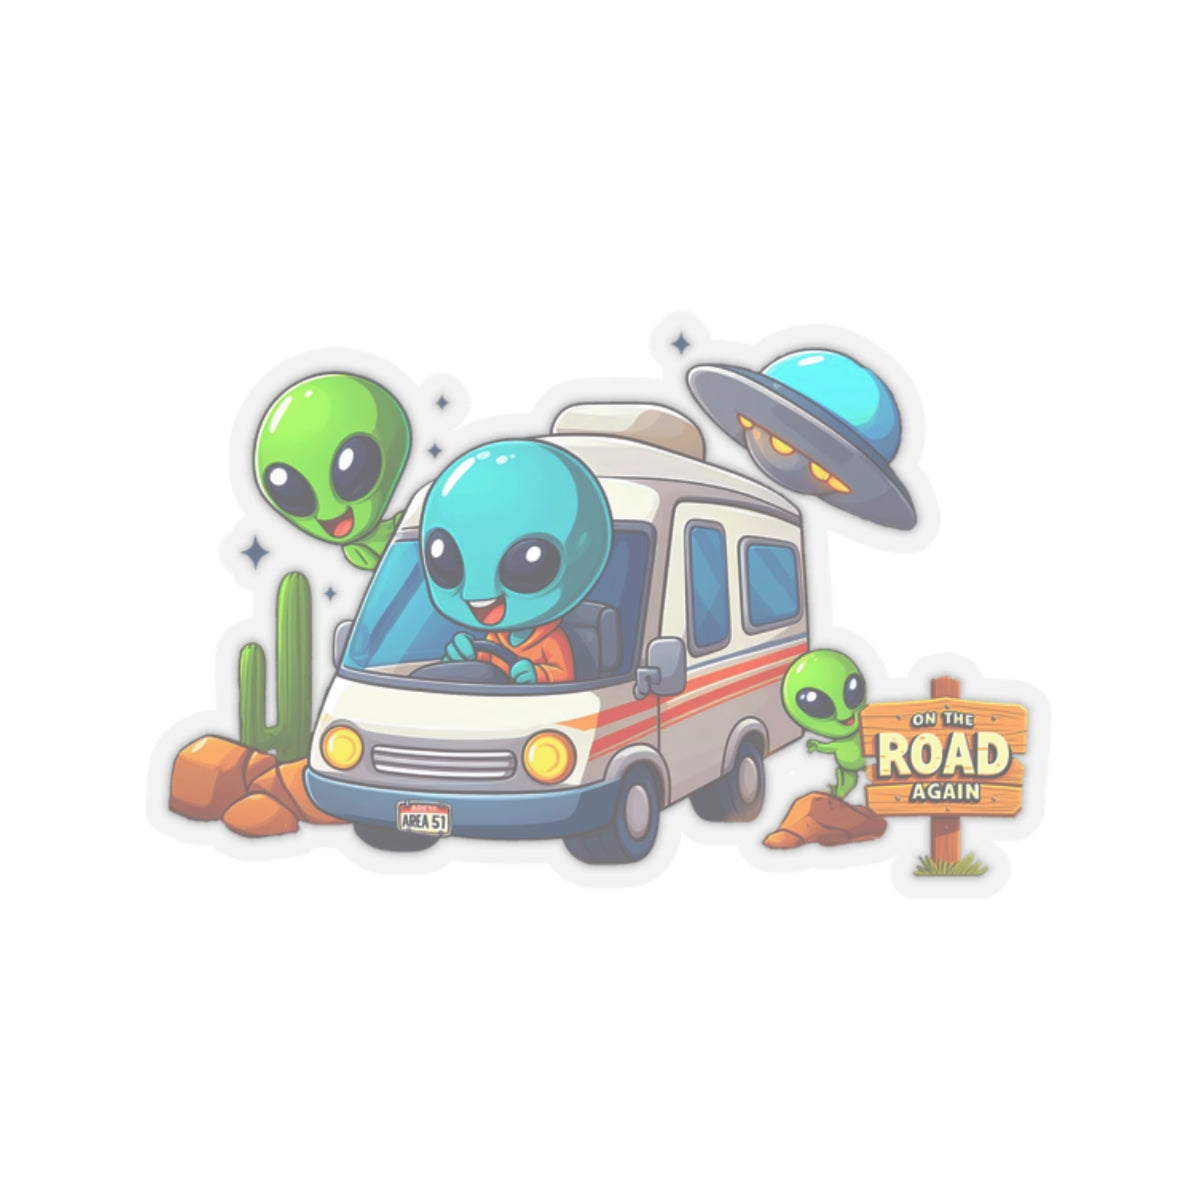 Trans On the Road Again - Alien RV Adventure Sticker by Generation Mood